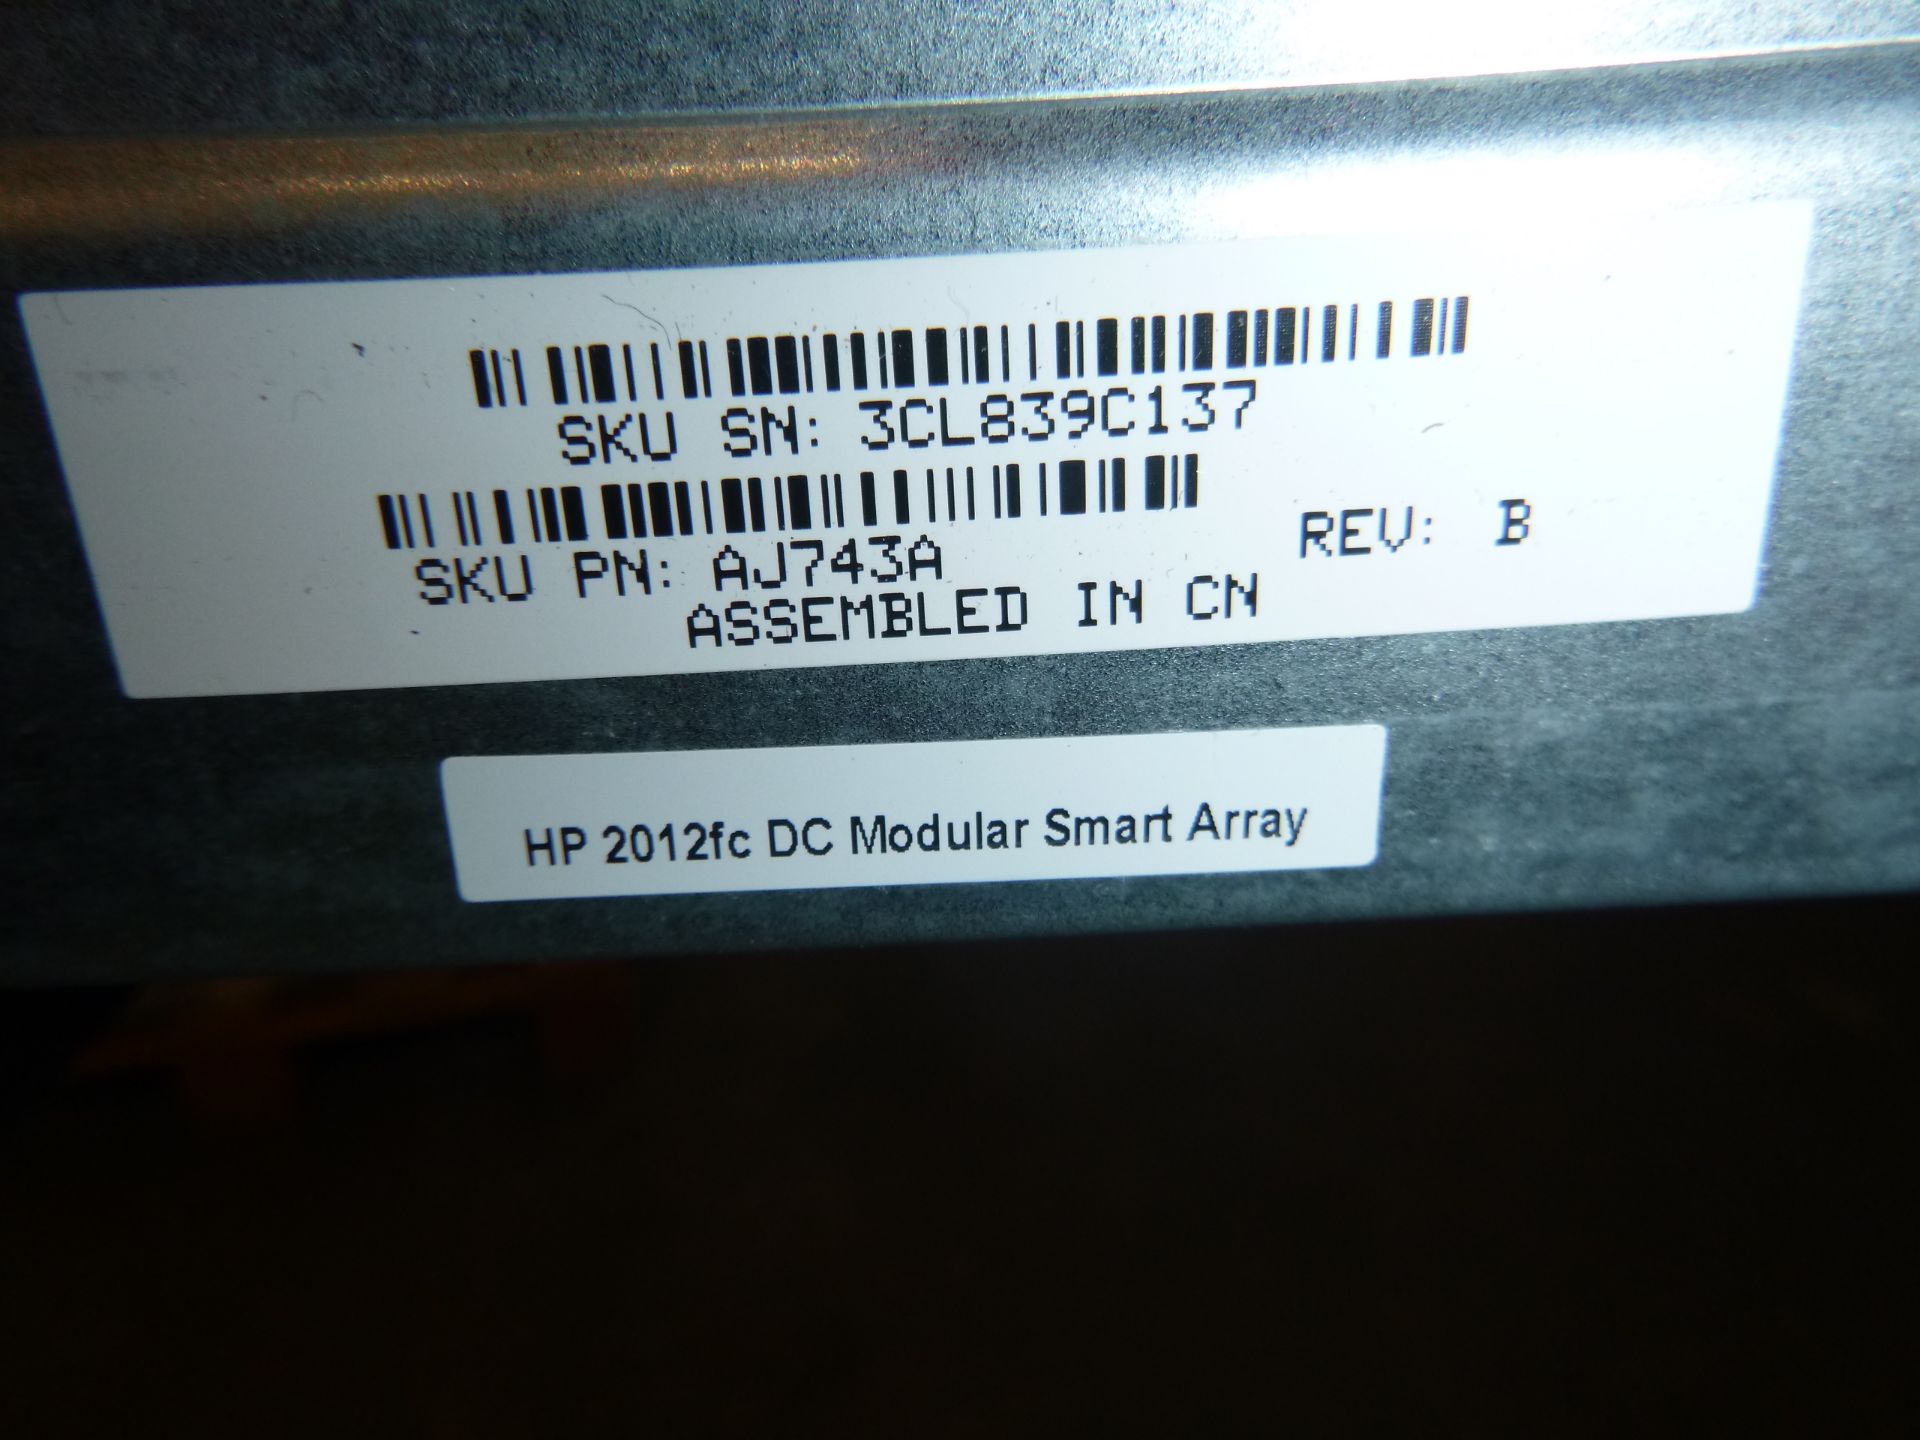 HP STORAGEWORKS 2112C MODULAR SMART HARD DRIVE ARRAY WITHOUT HARD DRIVES. THE HARD DRIVES HAVE ALL - Image 2 of 3